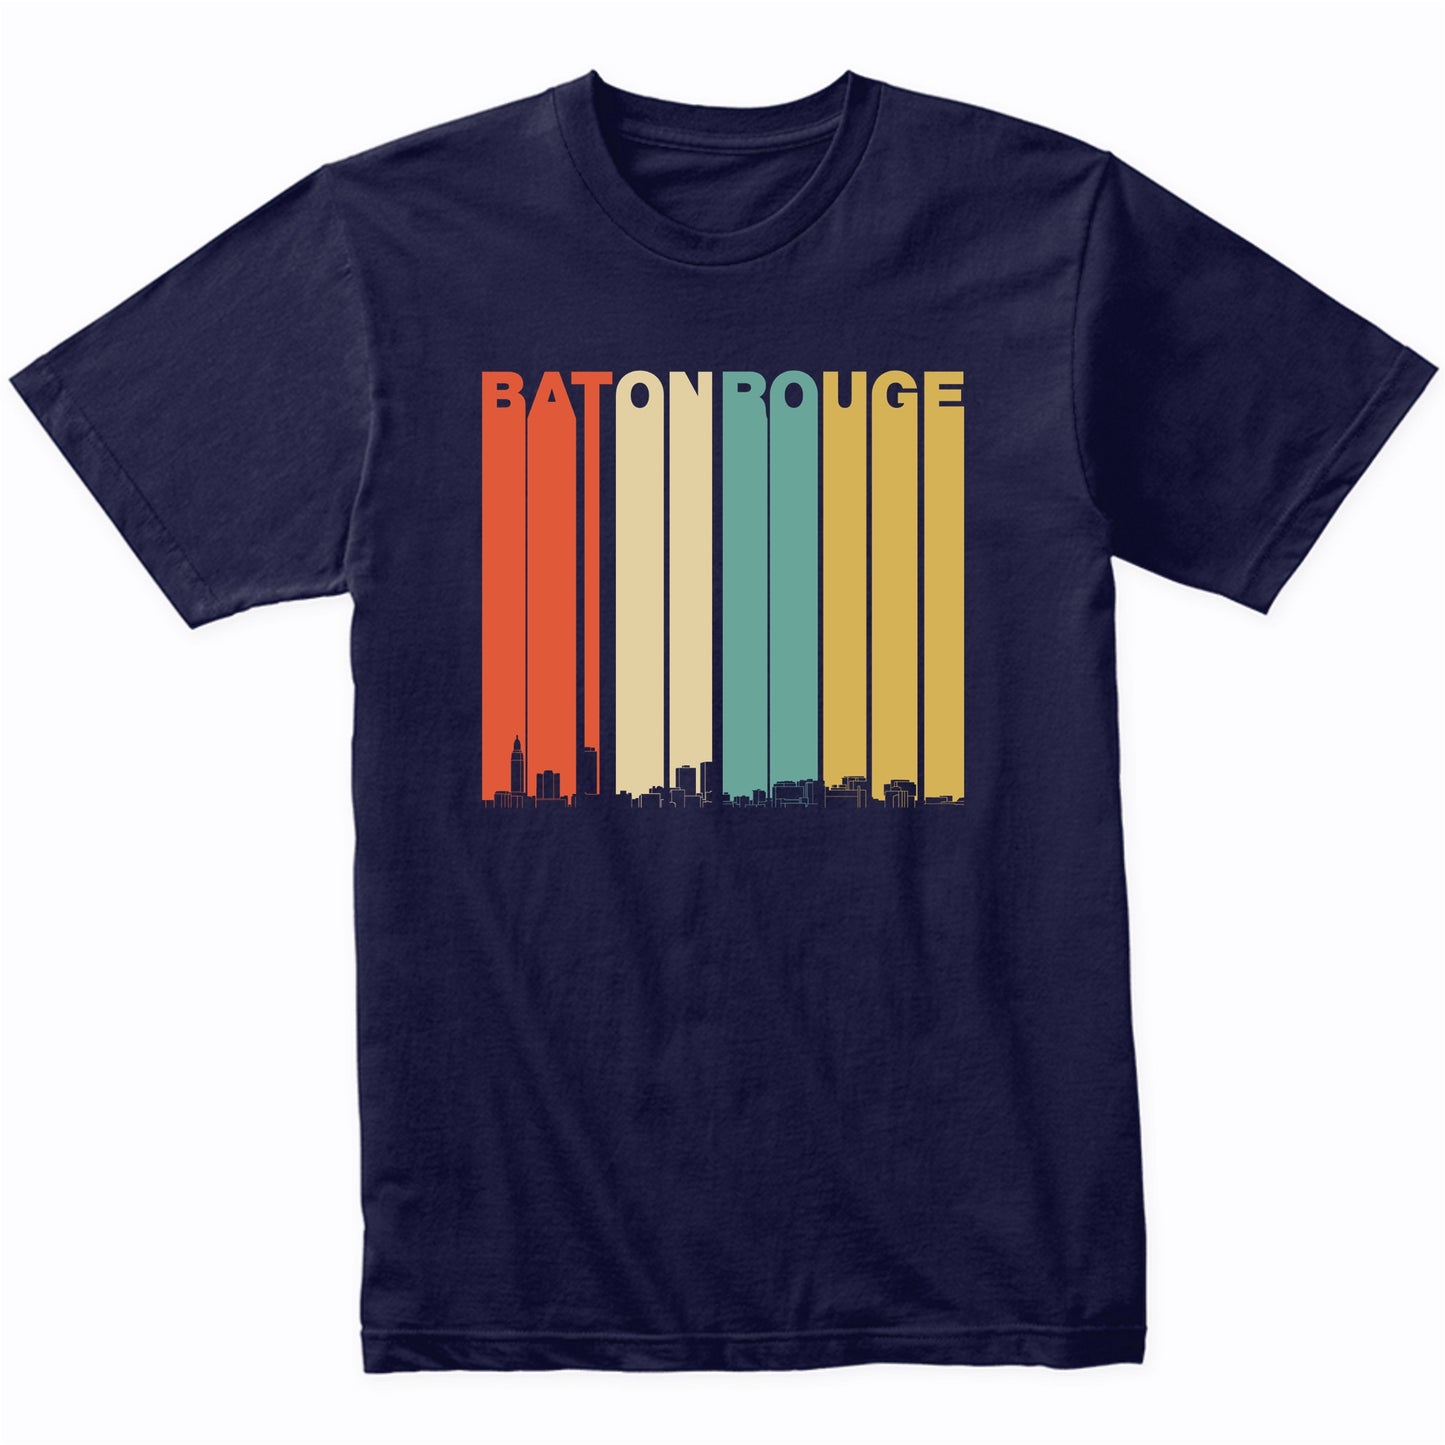 Vintage 1970's Style Baton Rouge Louisiana Skyline T-Shirt